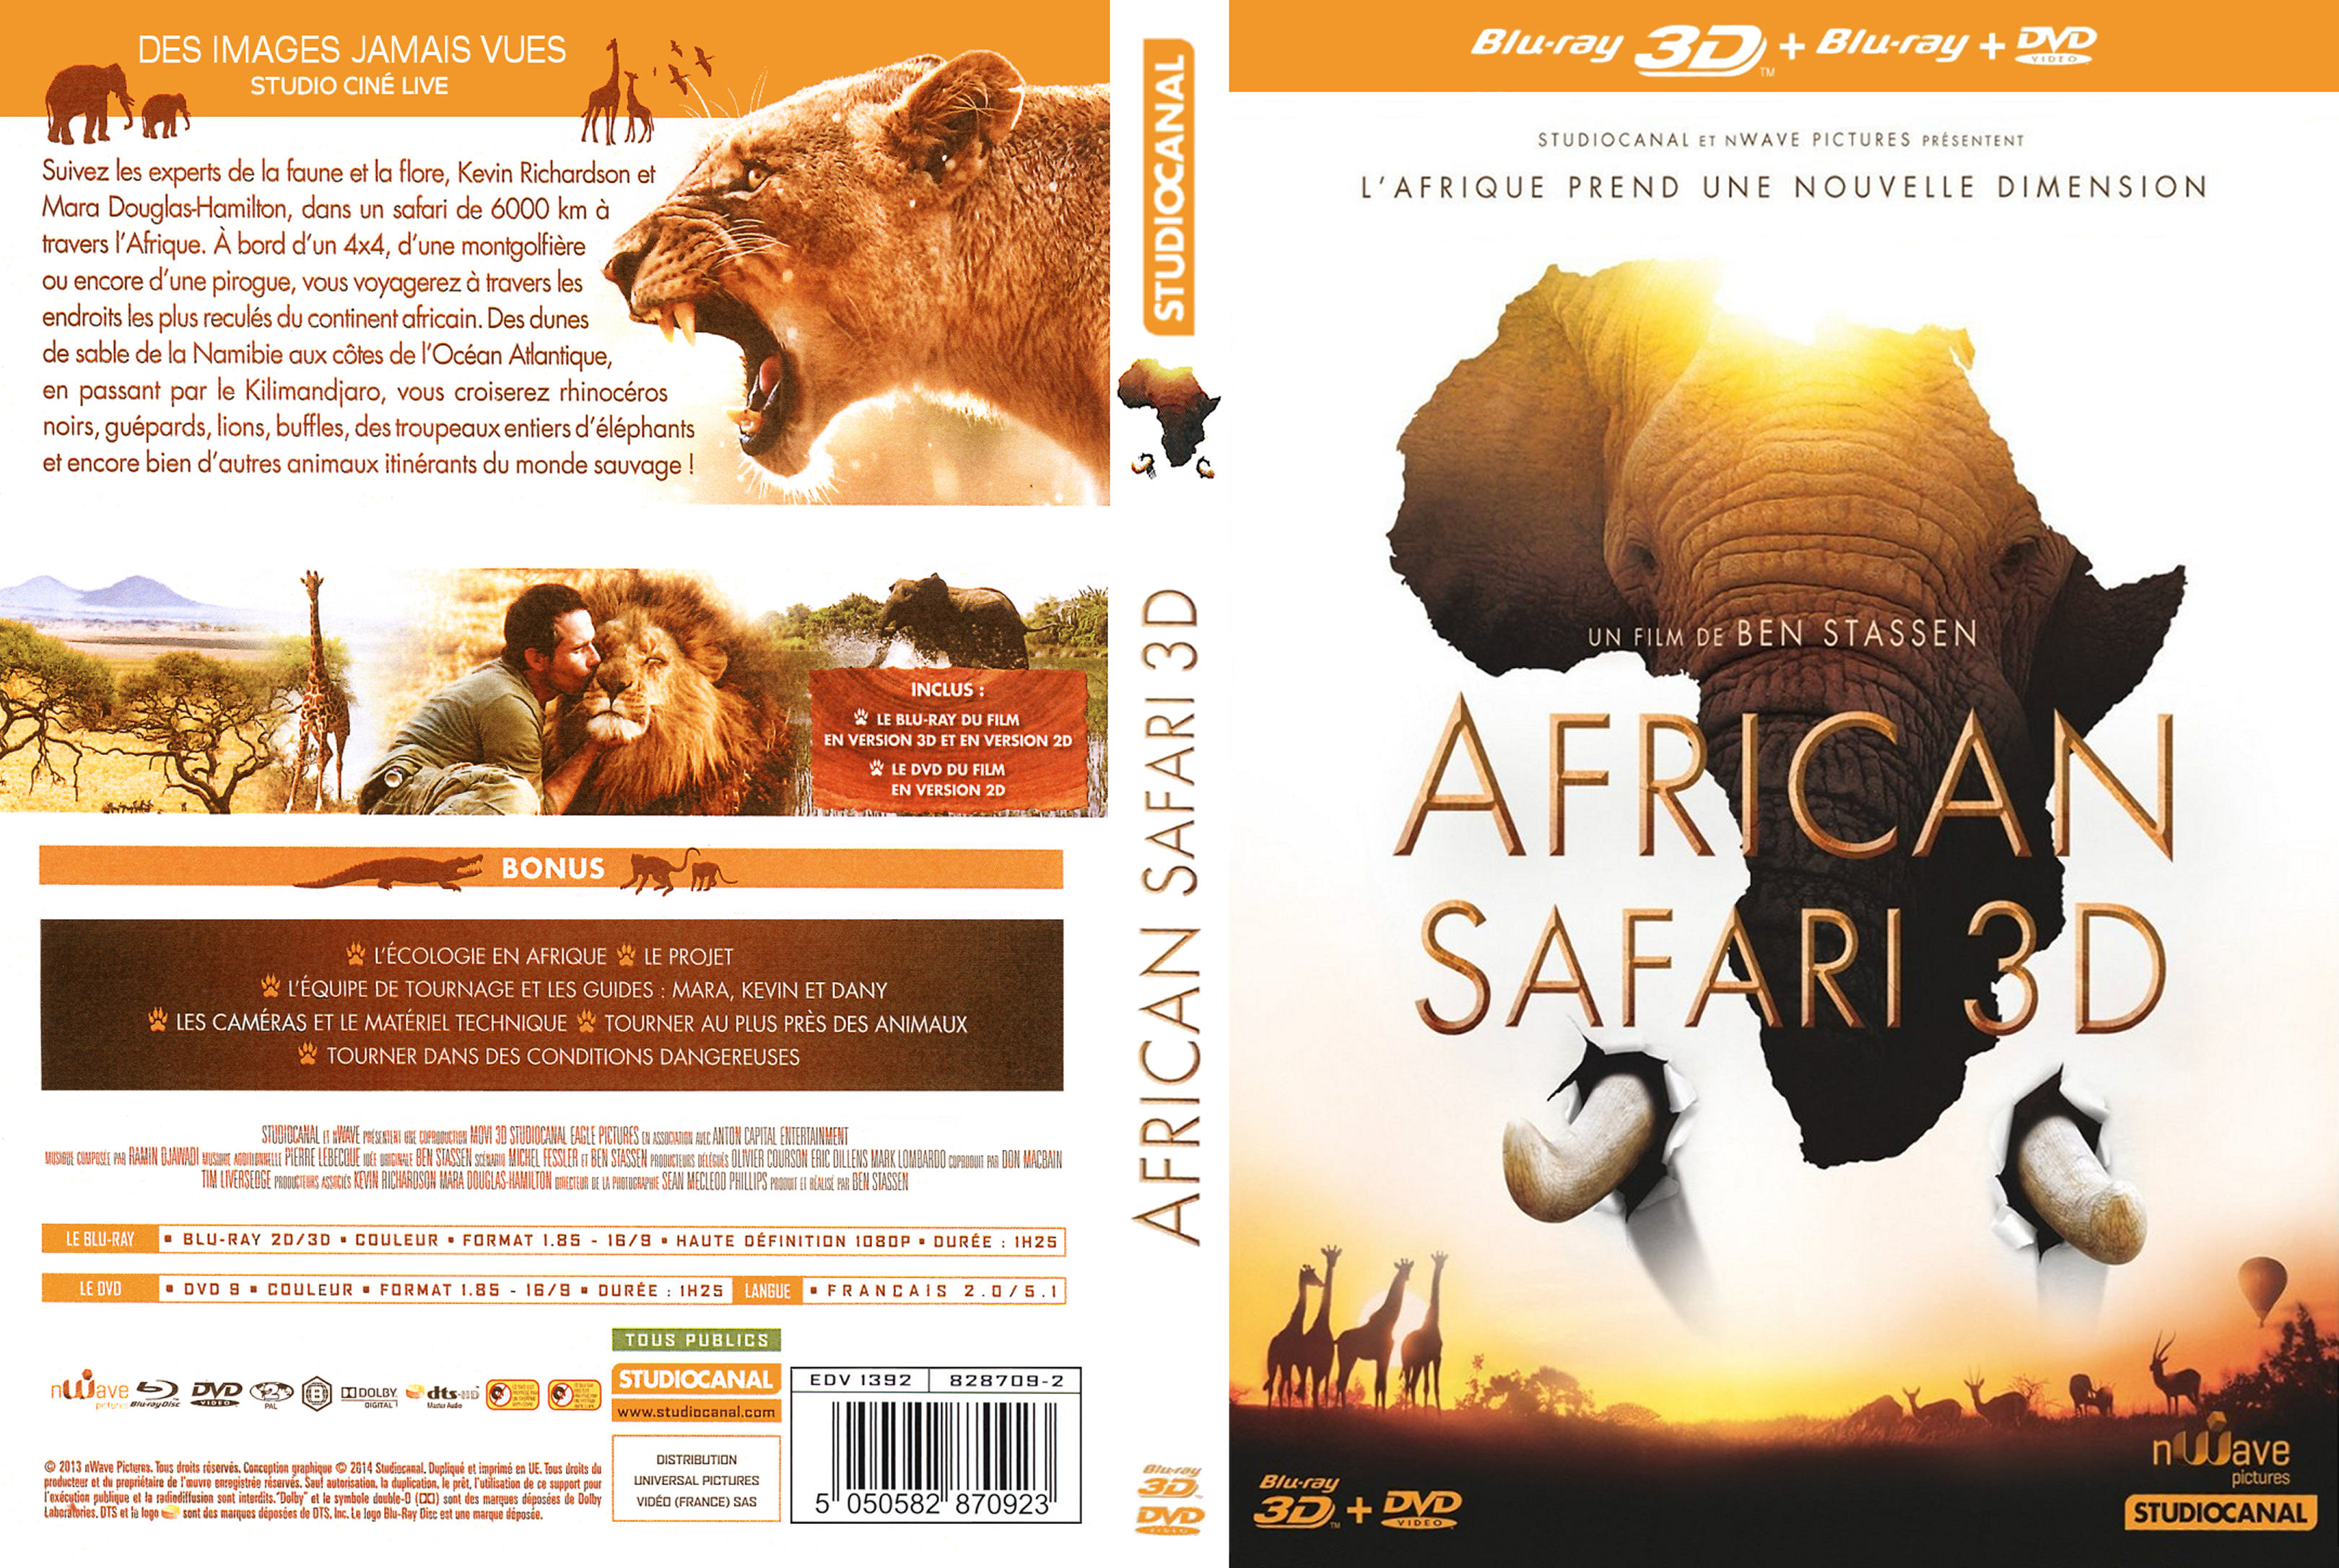 Jaquette DVD African Safari 3D custom